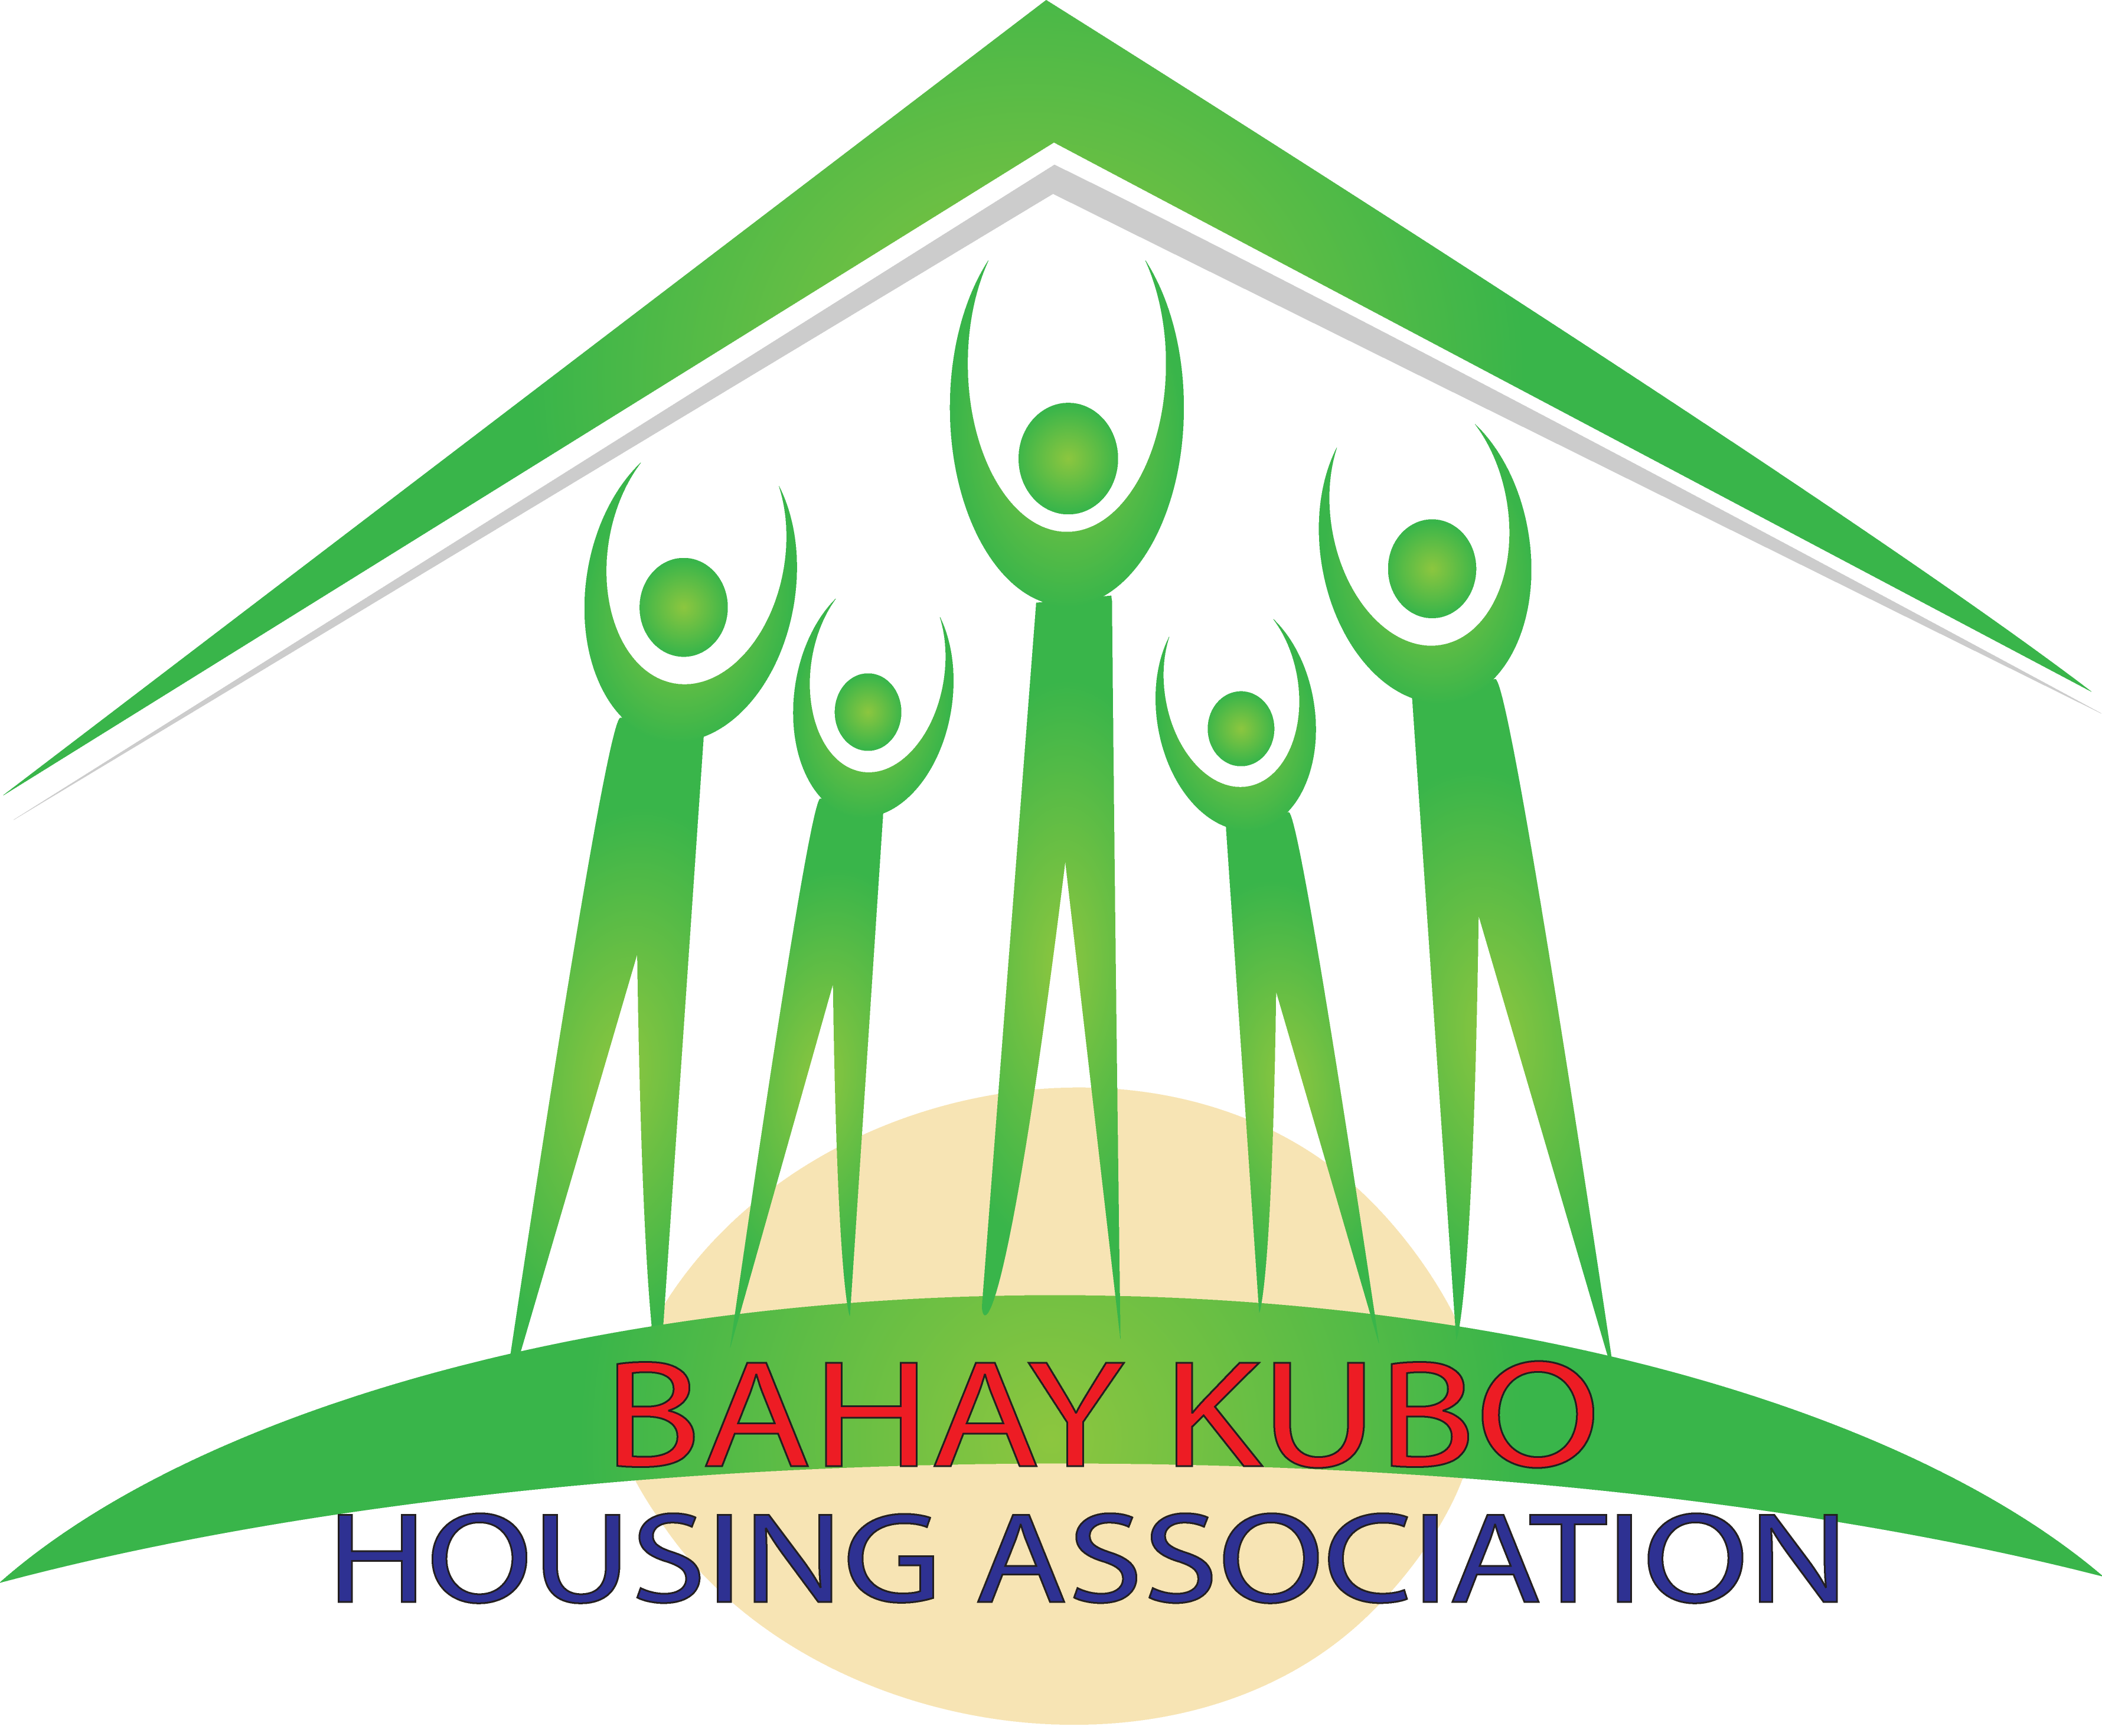 Bahay Kubo Housing Association logo